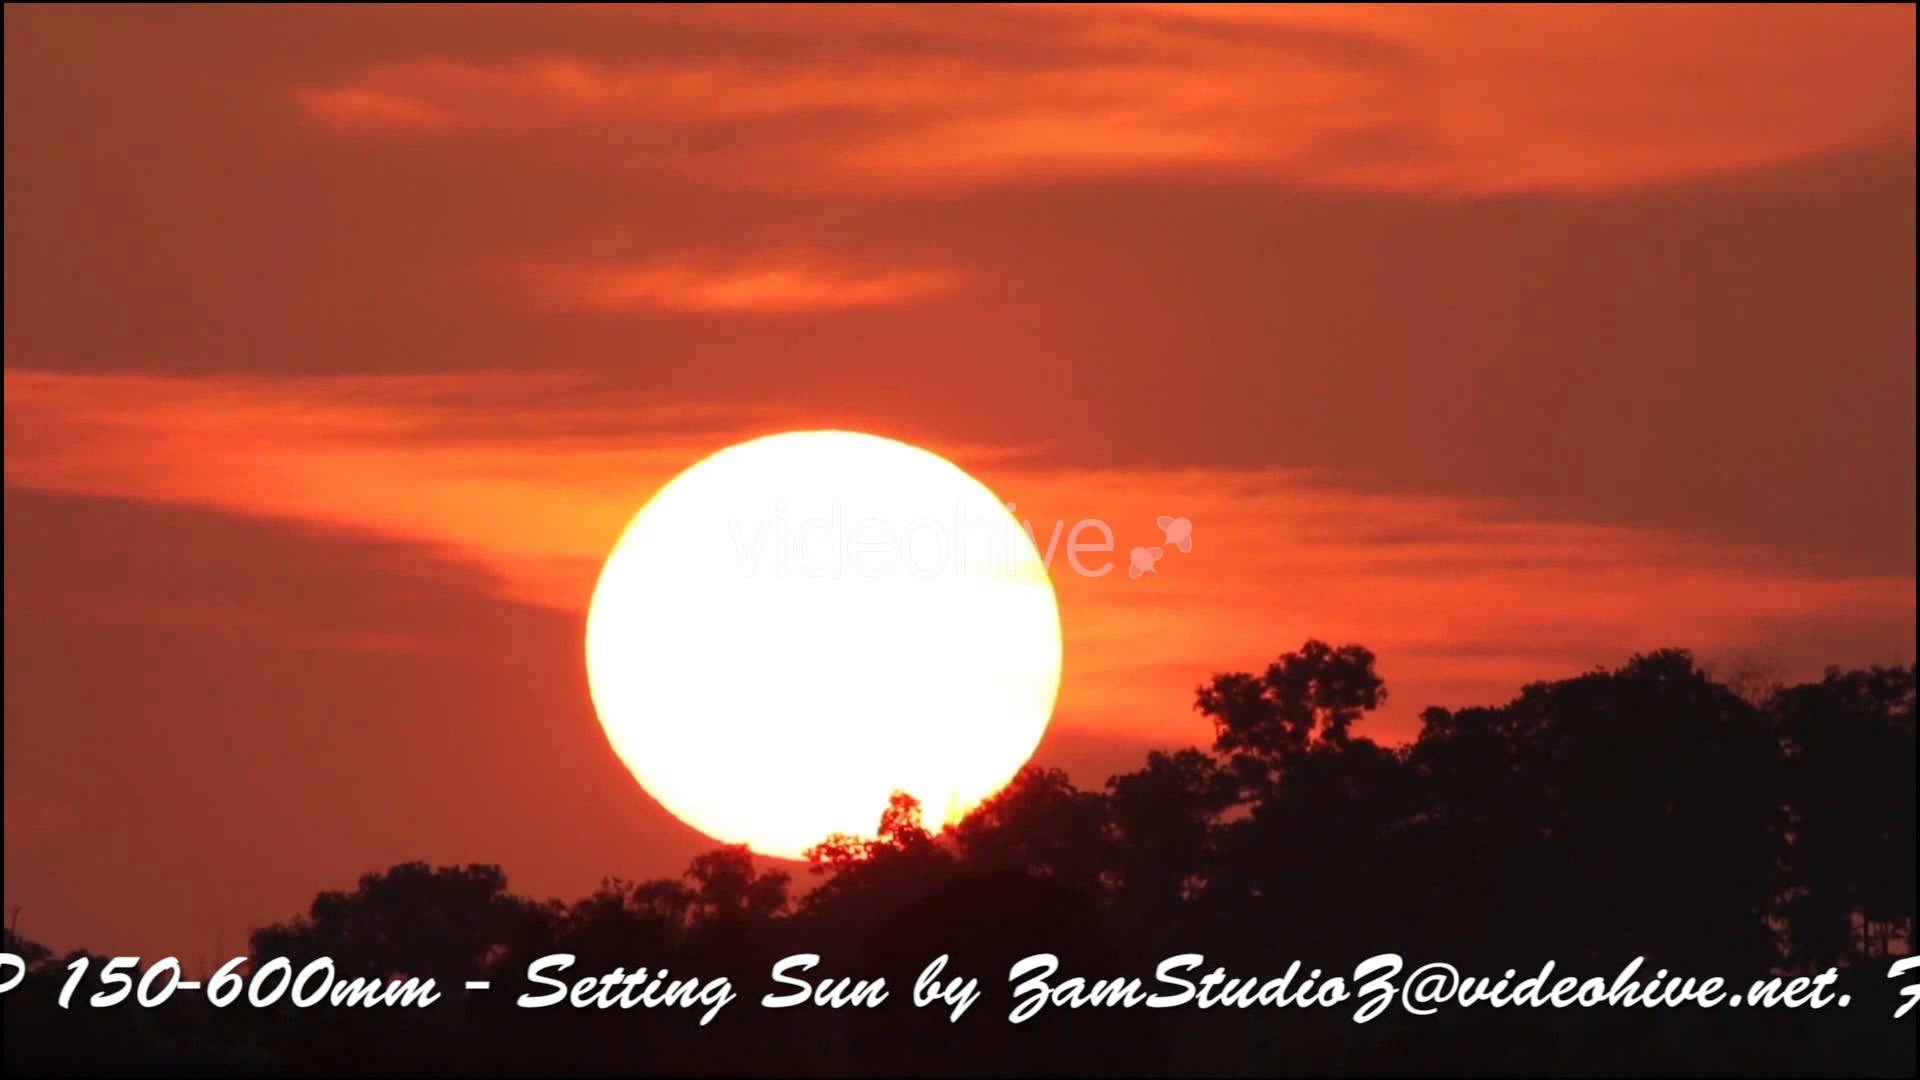 Canon EOS 7D Mk II + Tamron SP 150-600mm - Setting Sun @ Videohive ...